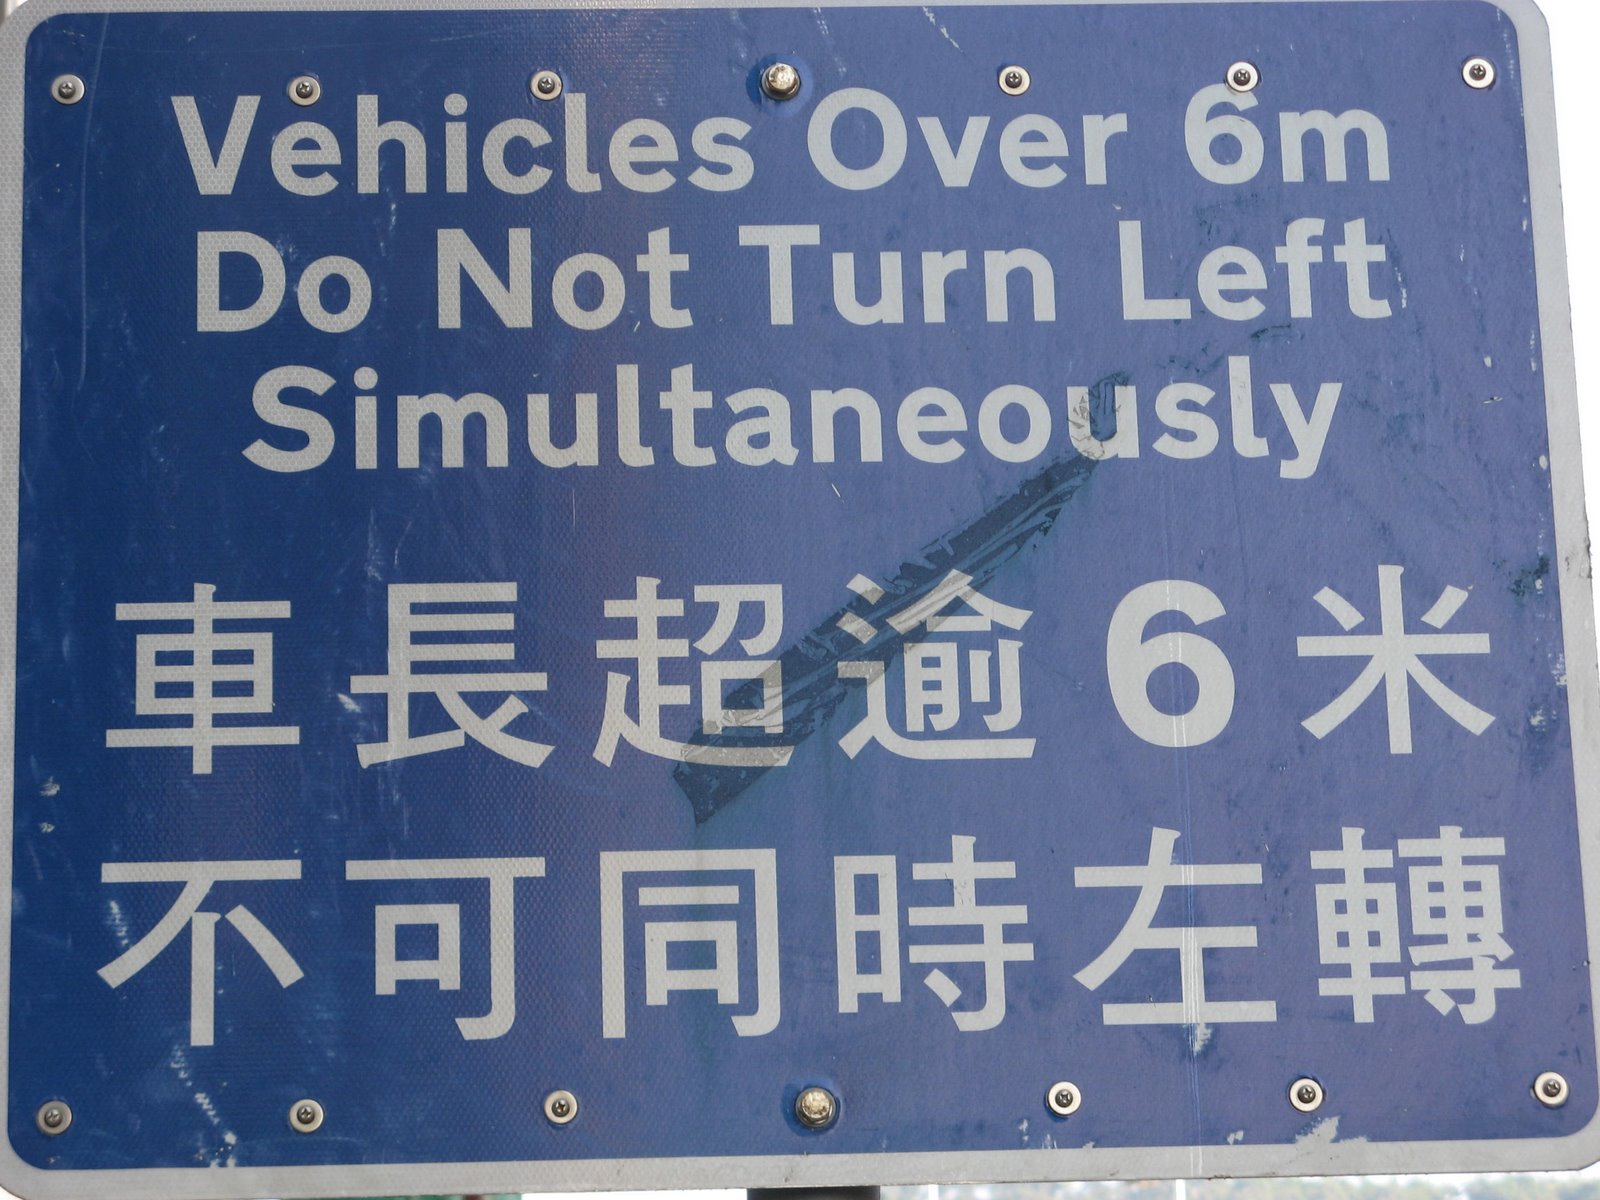 [Simultaneously+turn+left_road+sign.jpg]